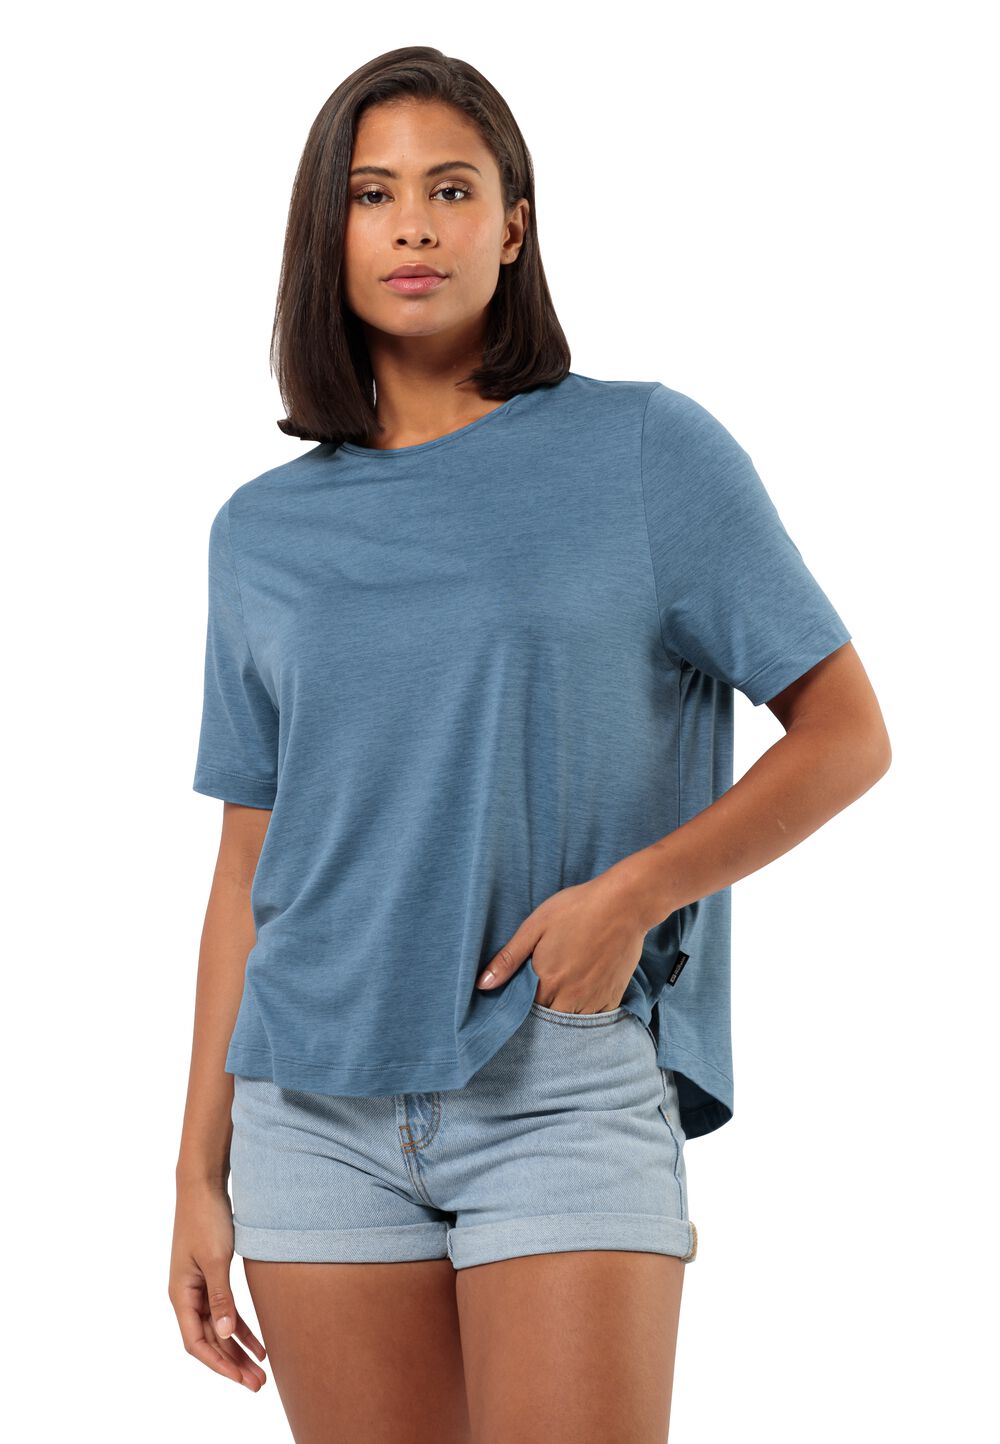 Jack Wolfskin Travel T-Shirt Women Functioneel shirt Dames XXL elemental blue elemental blue